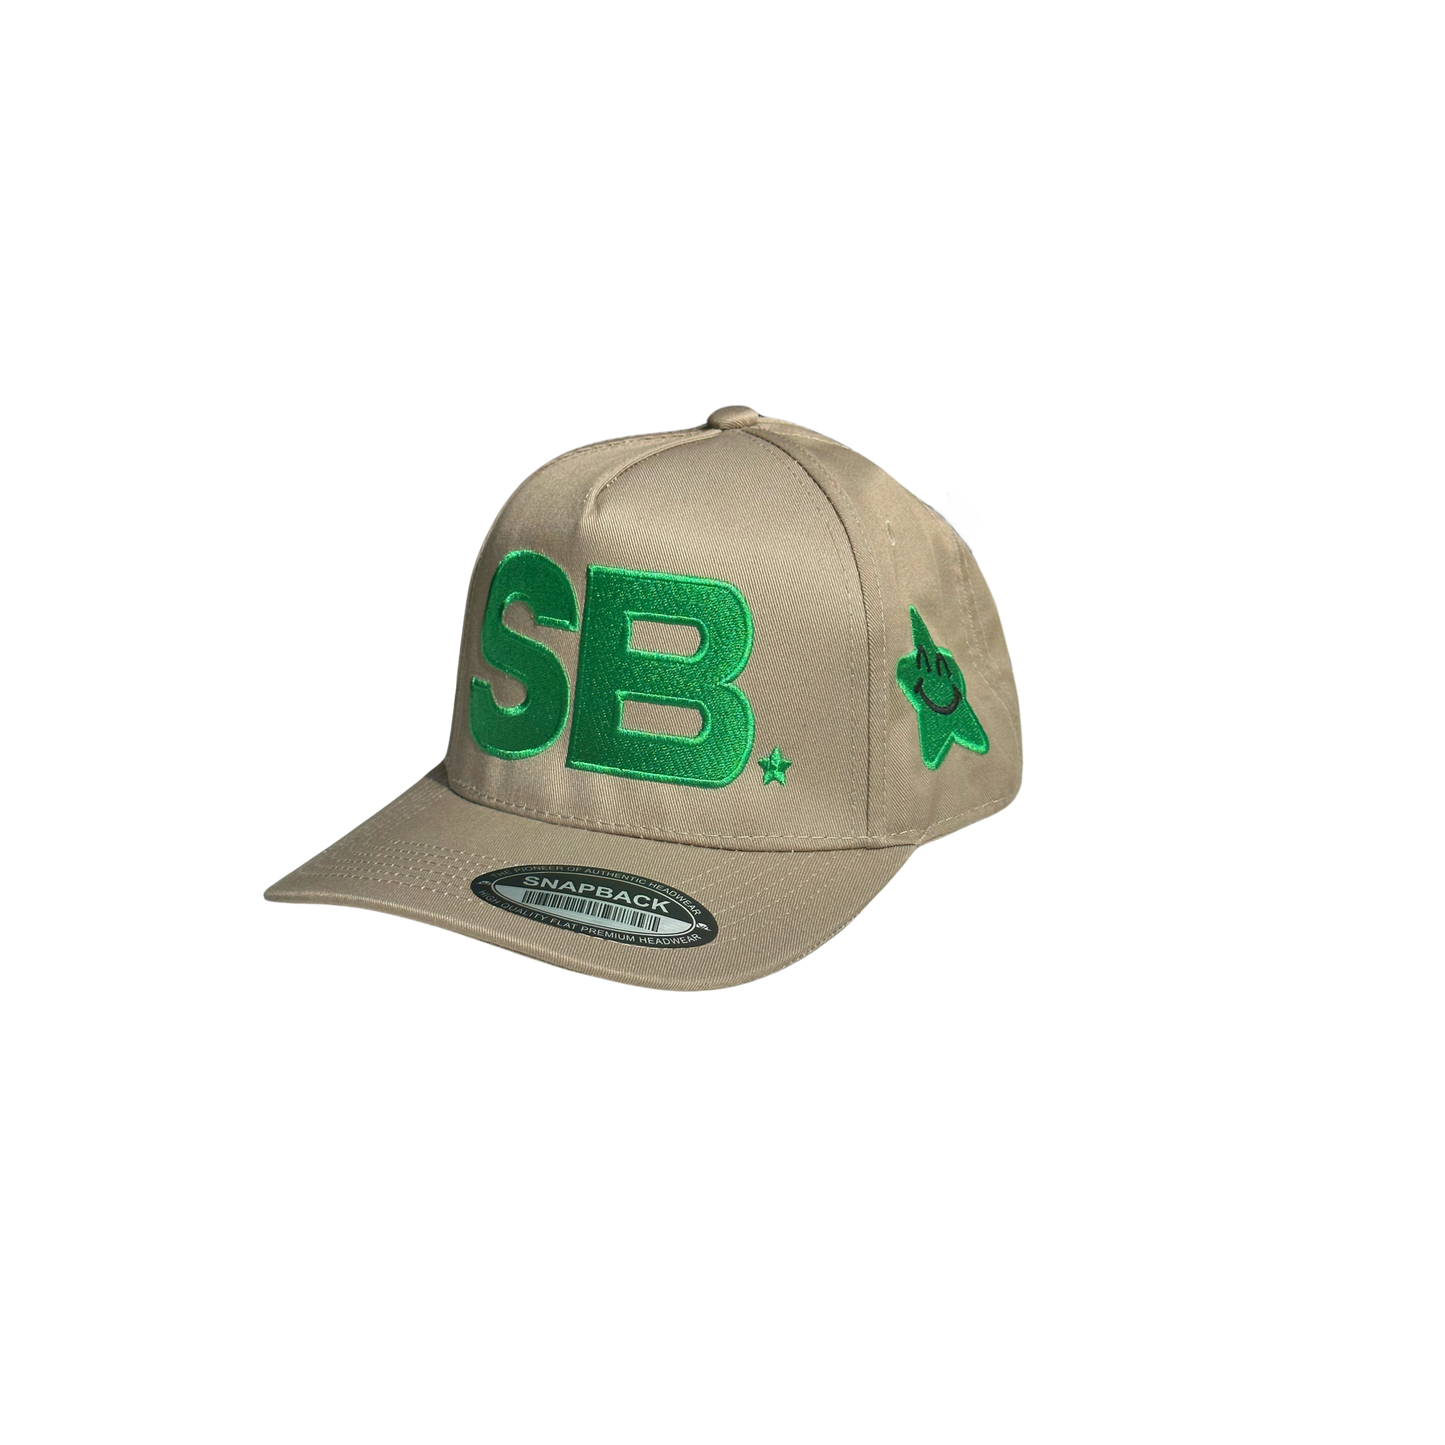 SB “SANDMAN” BASEBALL CAP